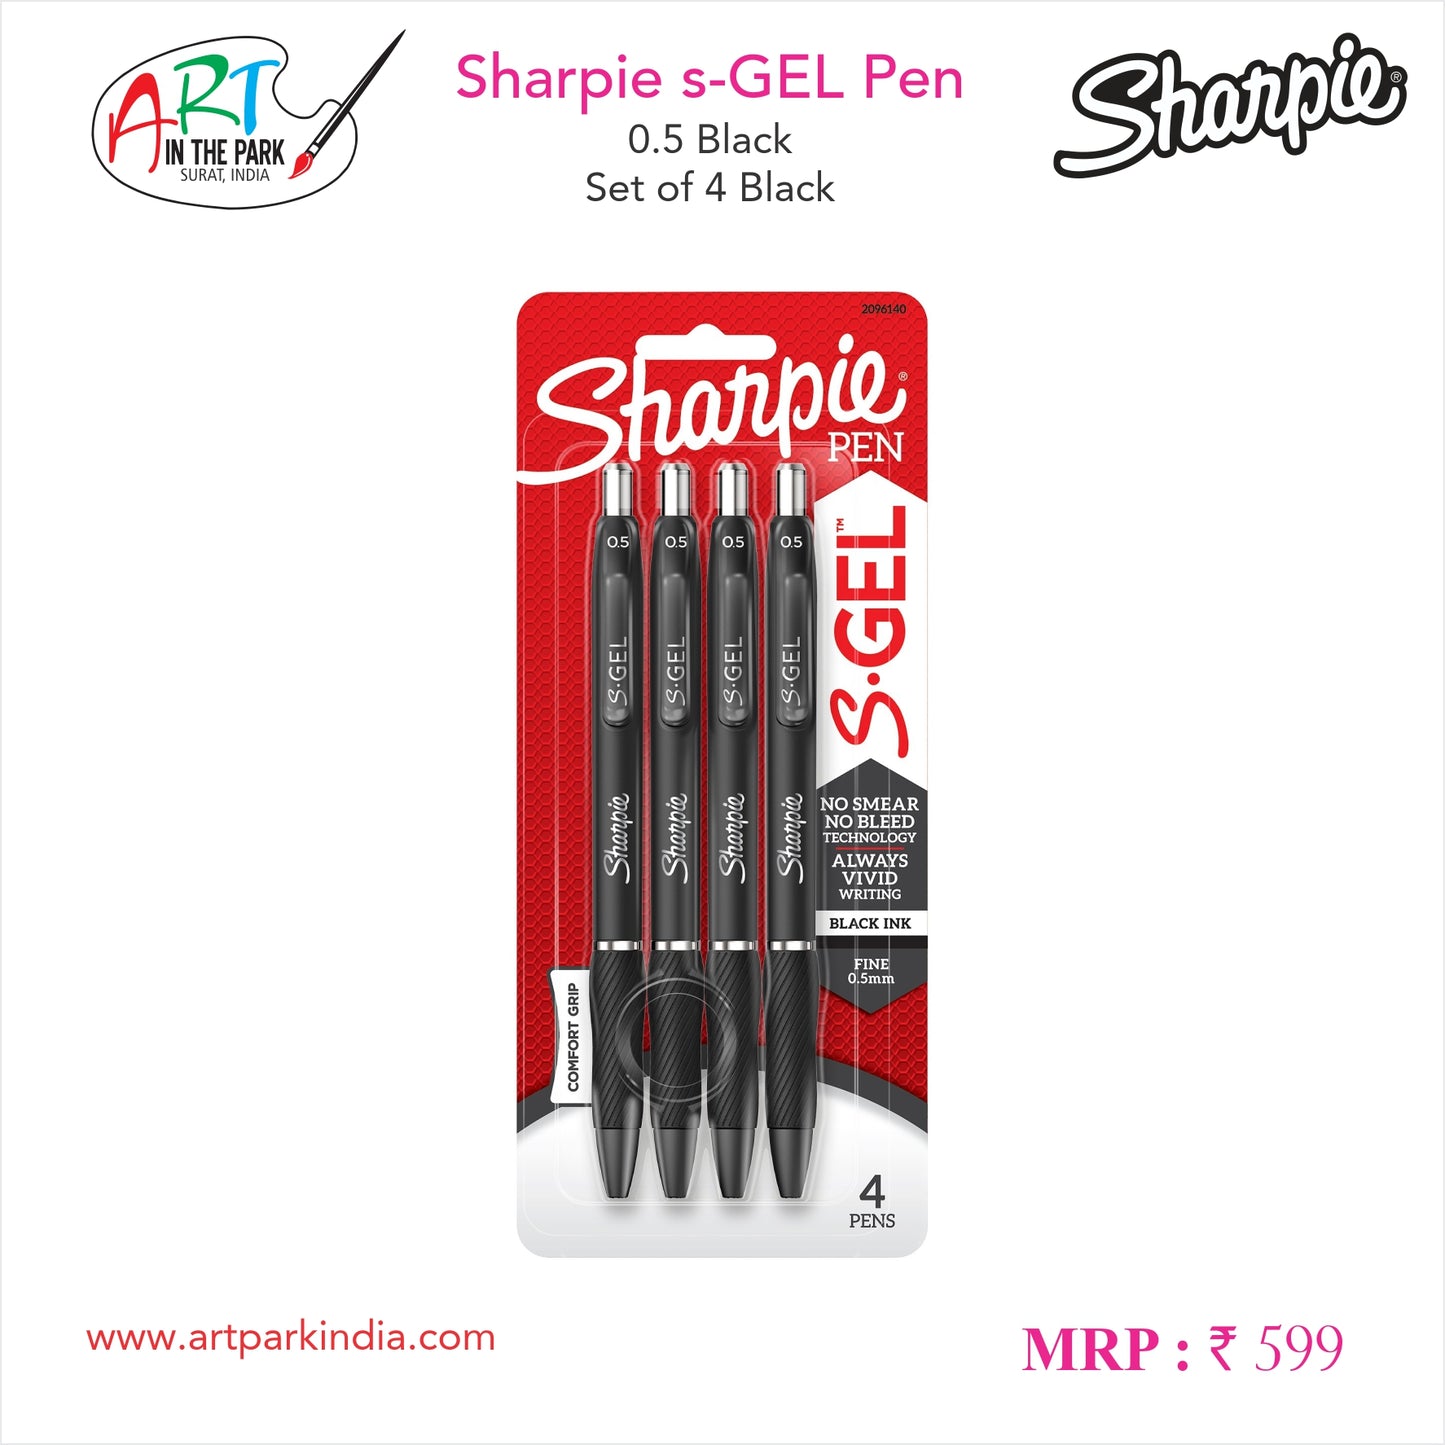 SHARPIE s-GEL PEN 0.5 BLACK SET OF 4